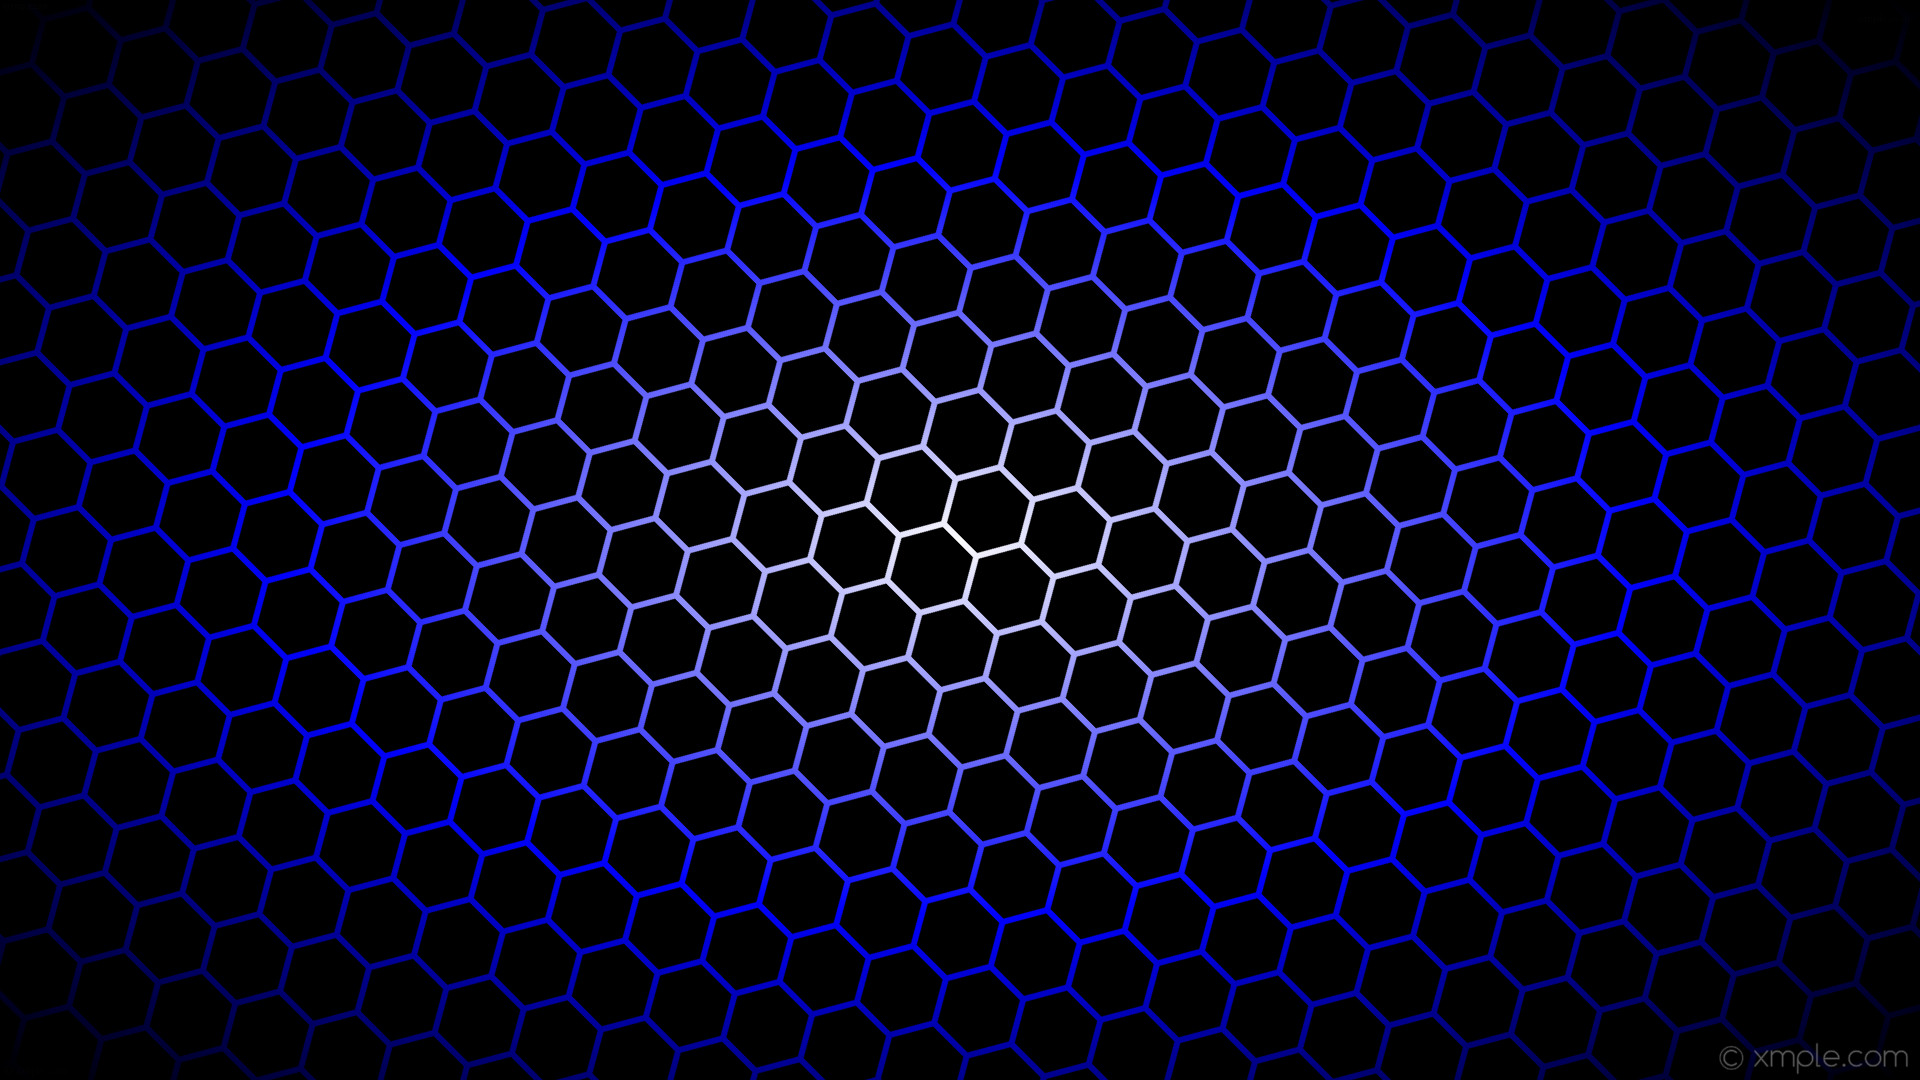 1920x1080 wallpaper blue hexagon glow white gradient black #000000 #ffffff #0000ff  diagonal 45Â°